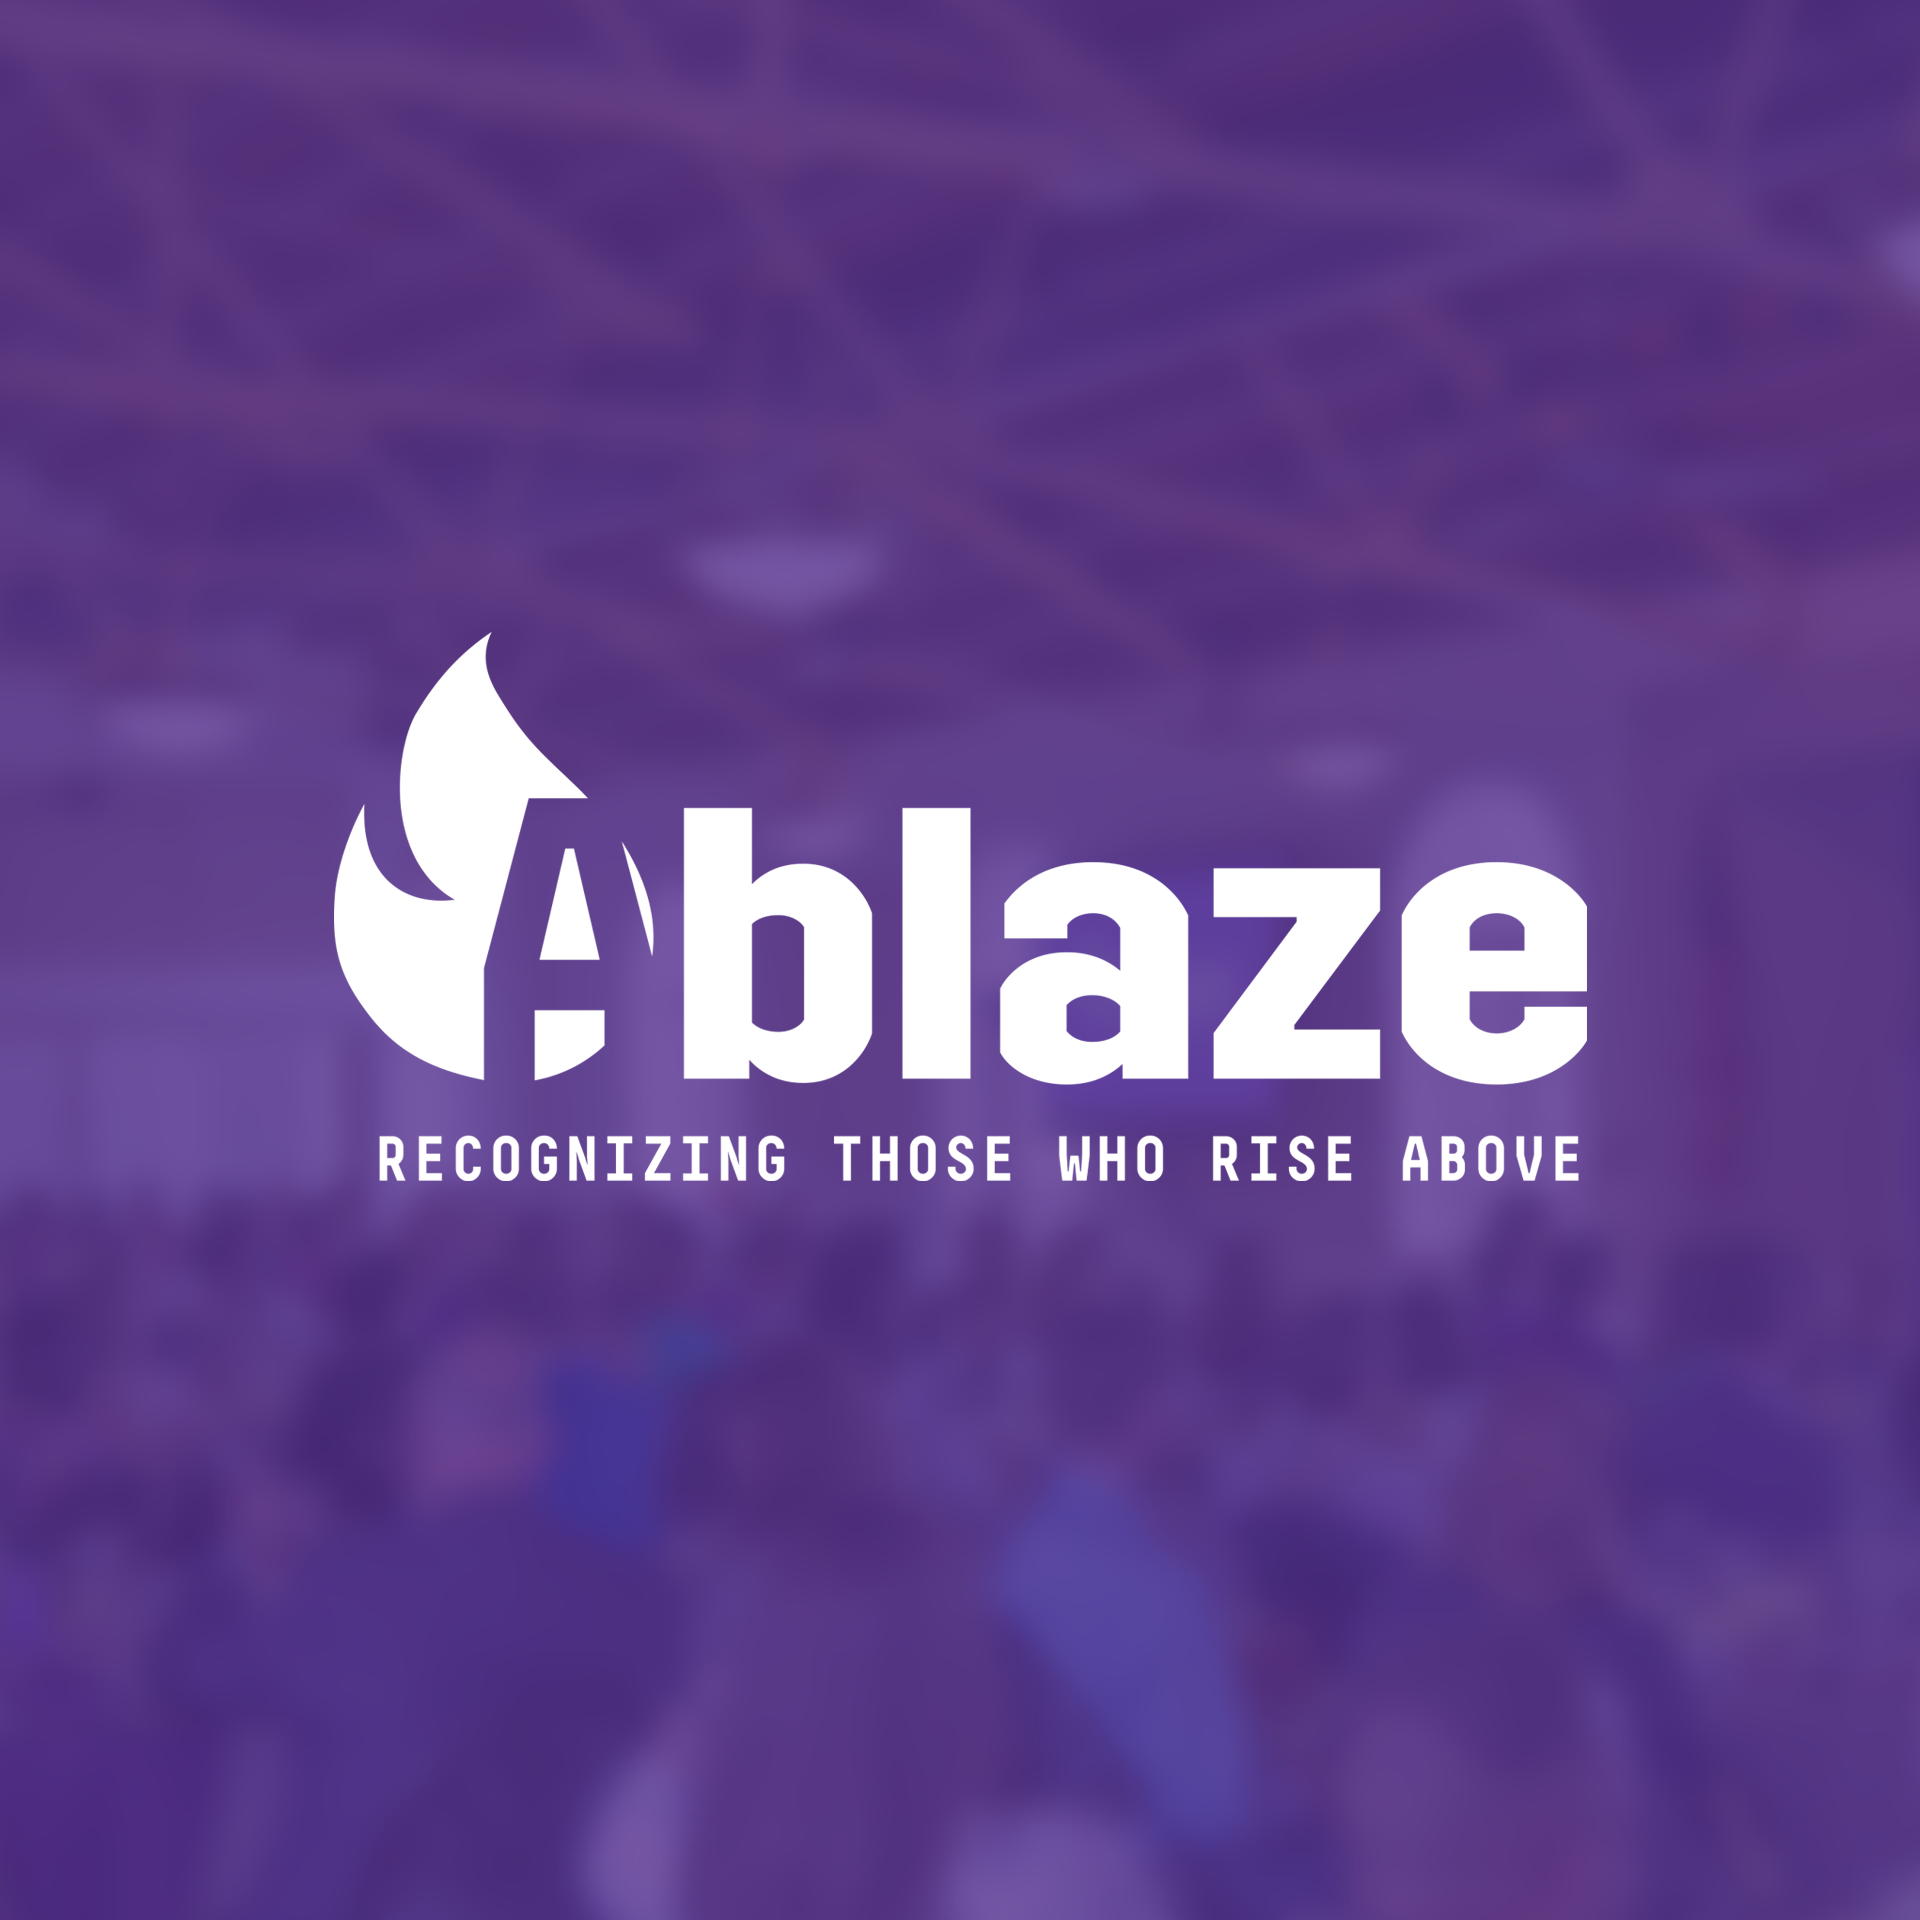 Graphic of Ablaze logo